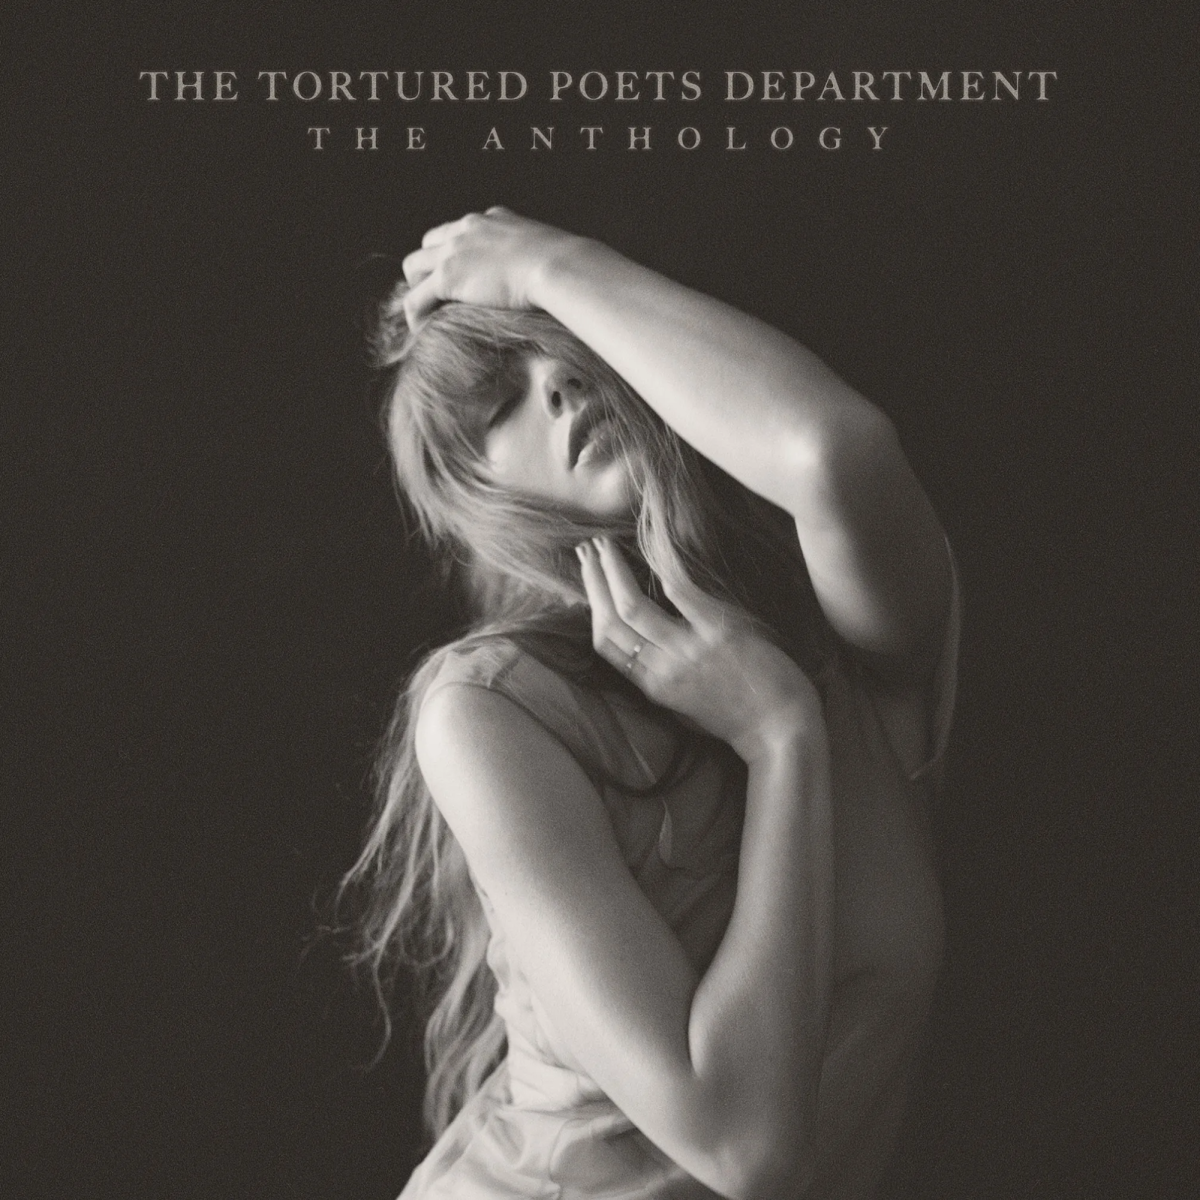 The Tortured Poets Department: Taylor Swift’s Manuscript